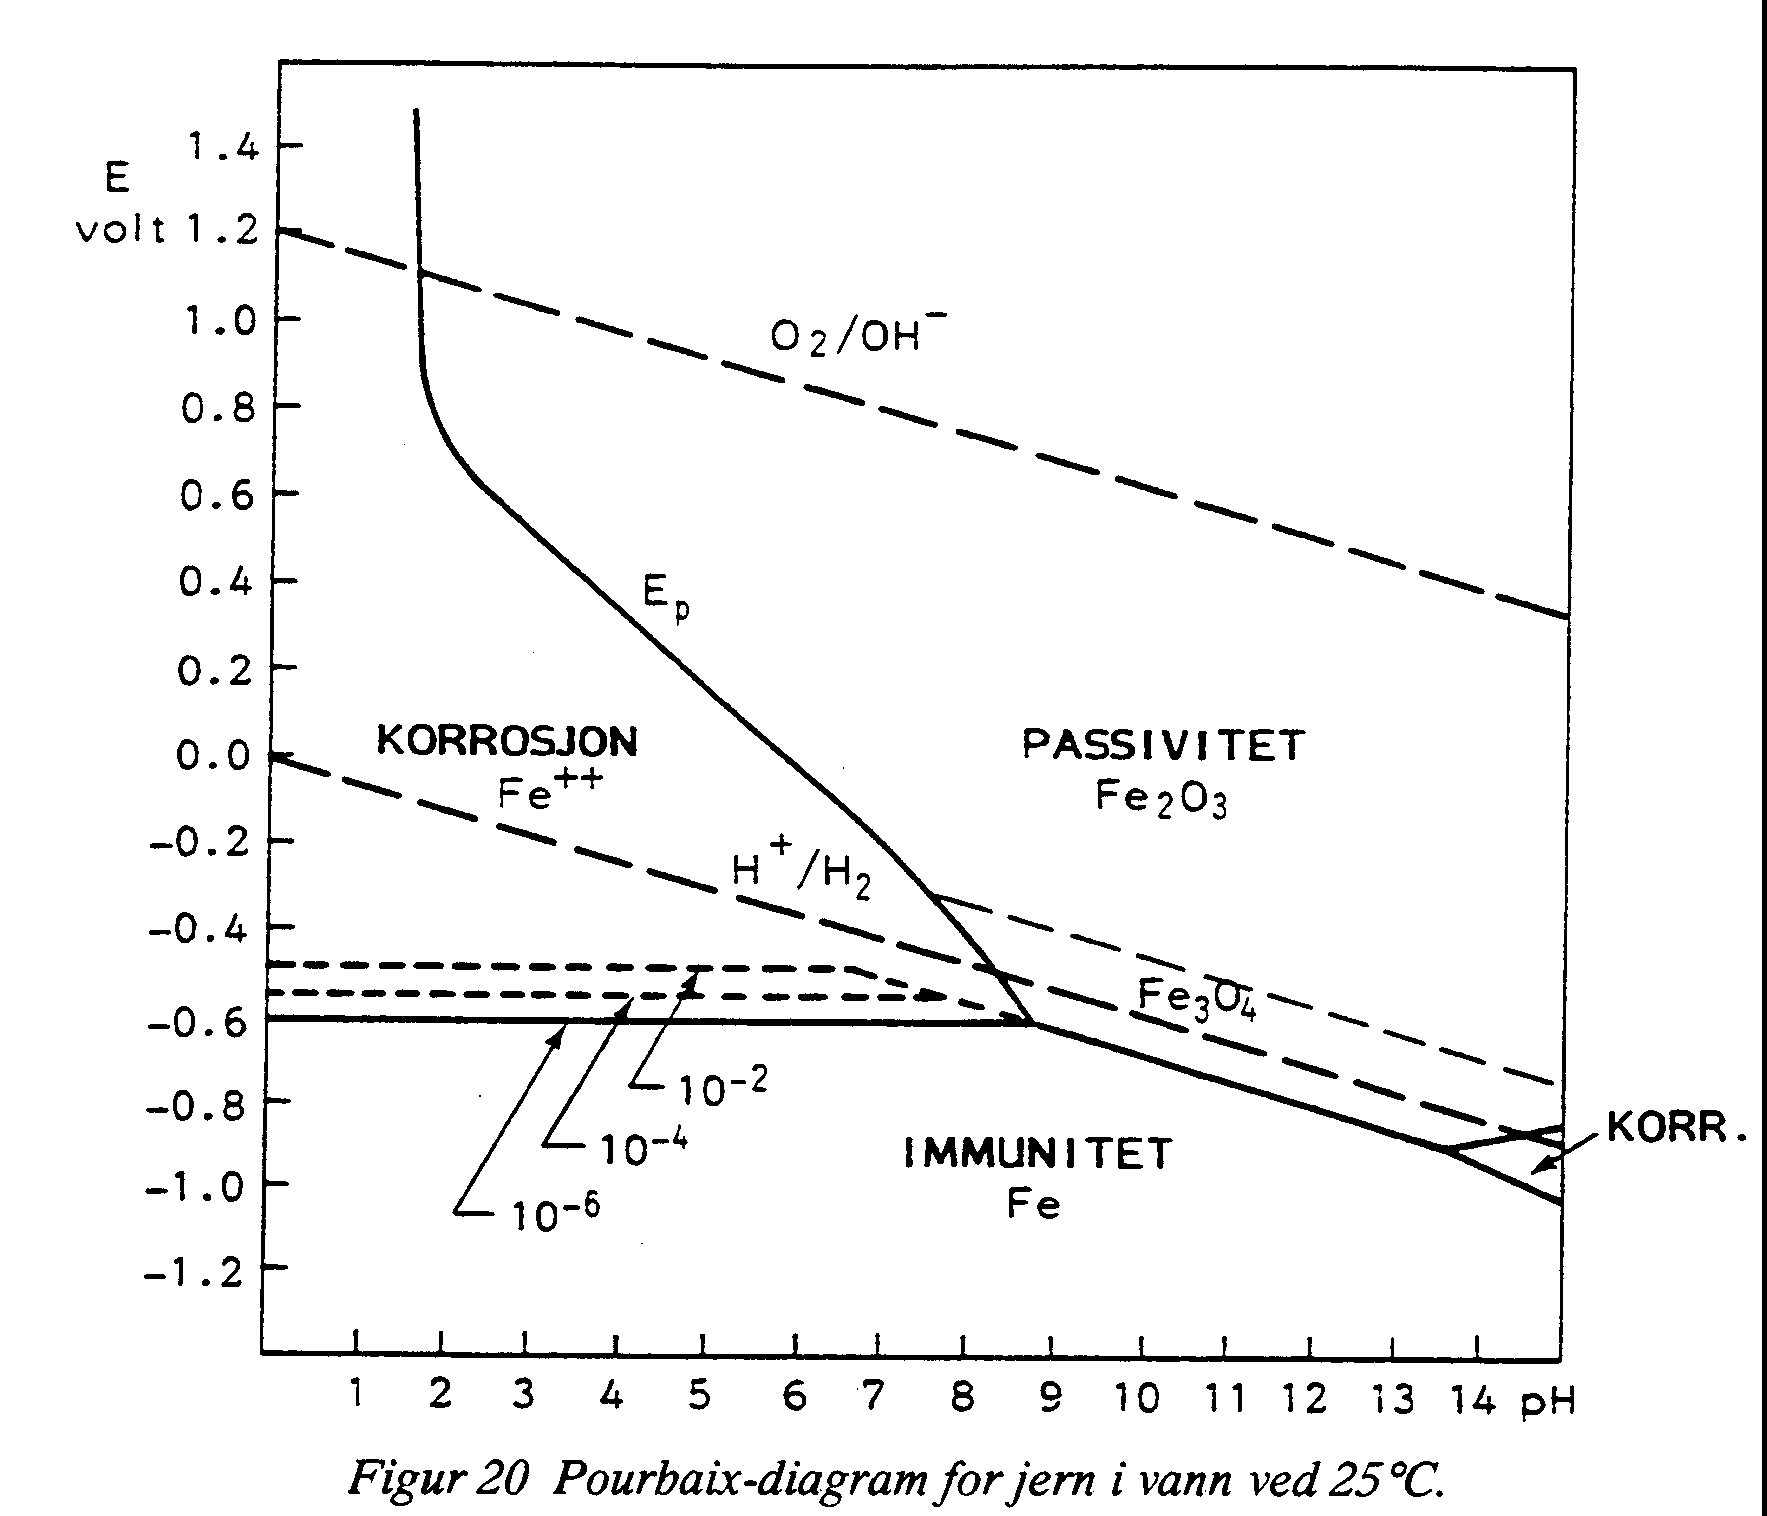 Pourbaixdiagram for jern